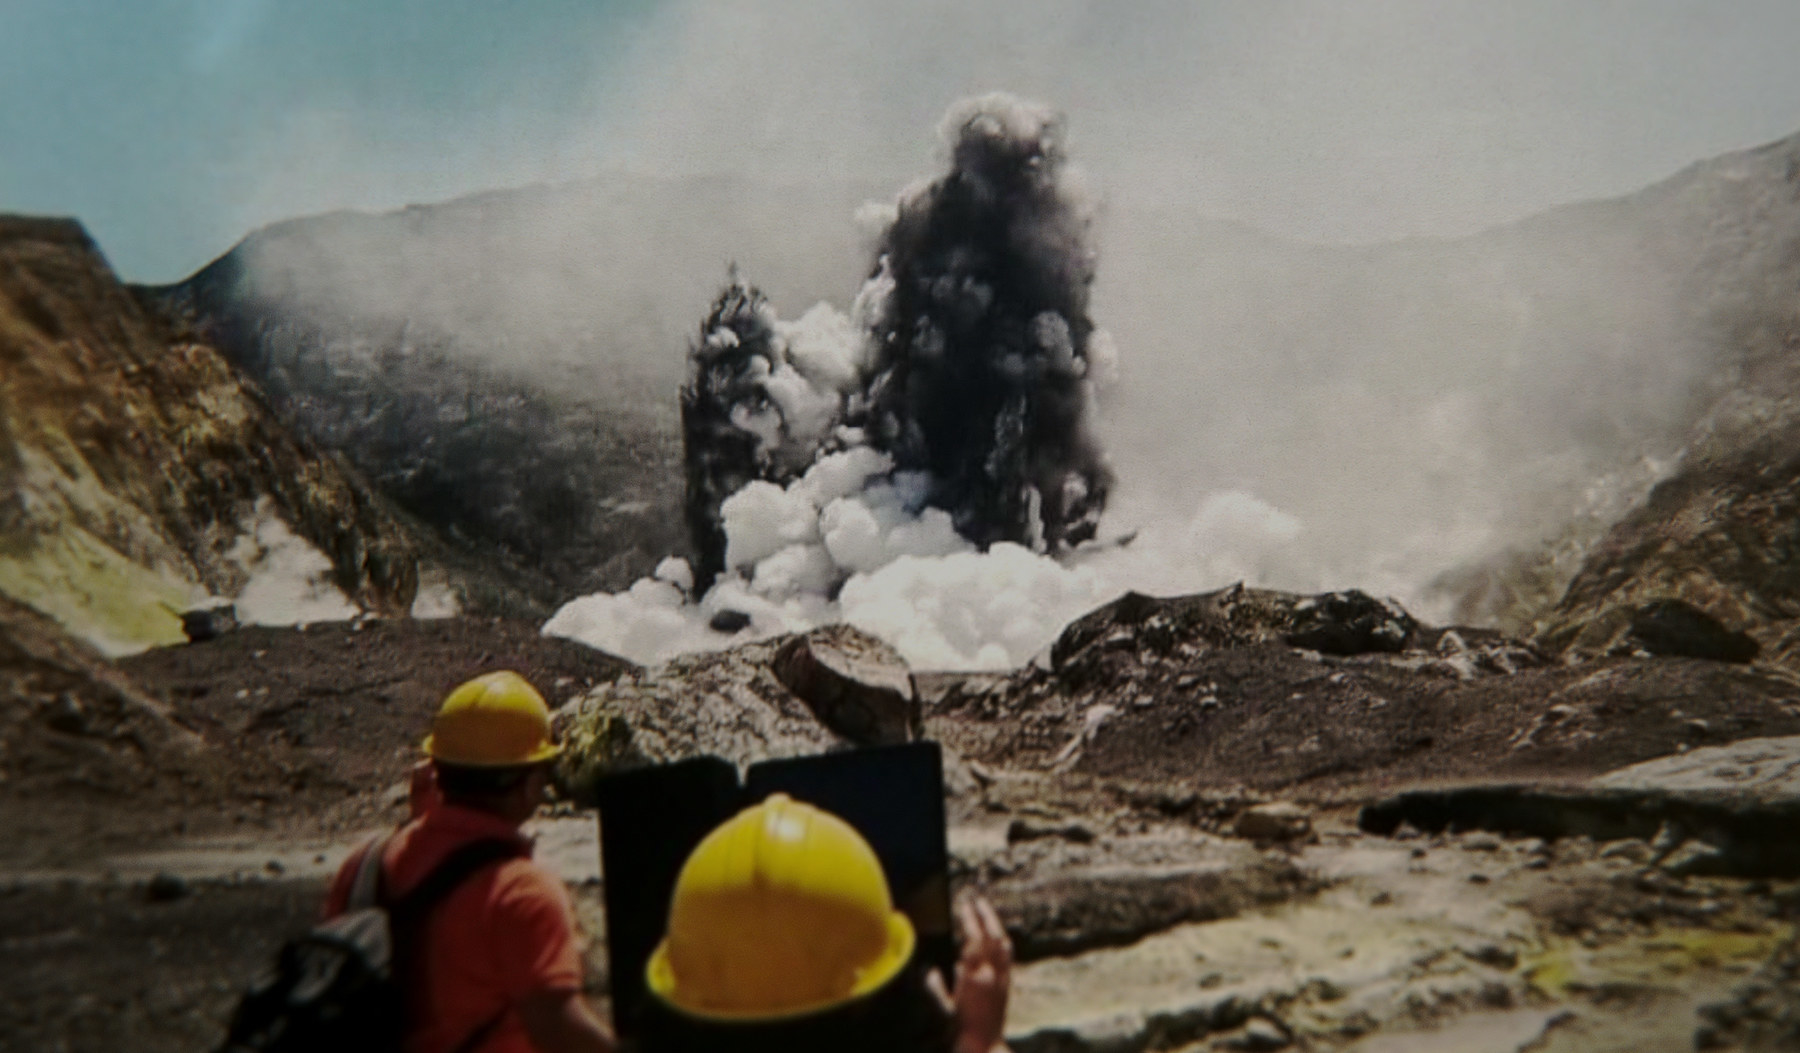 the Whakaari explosion as it happened